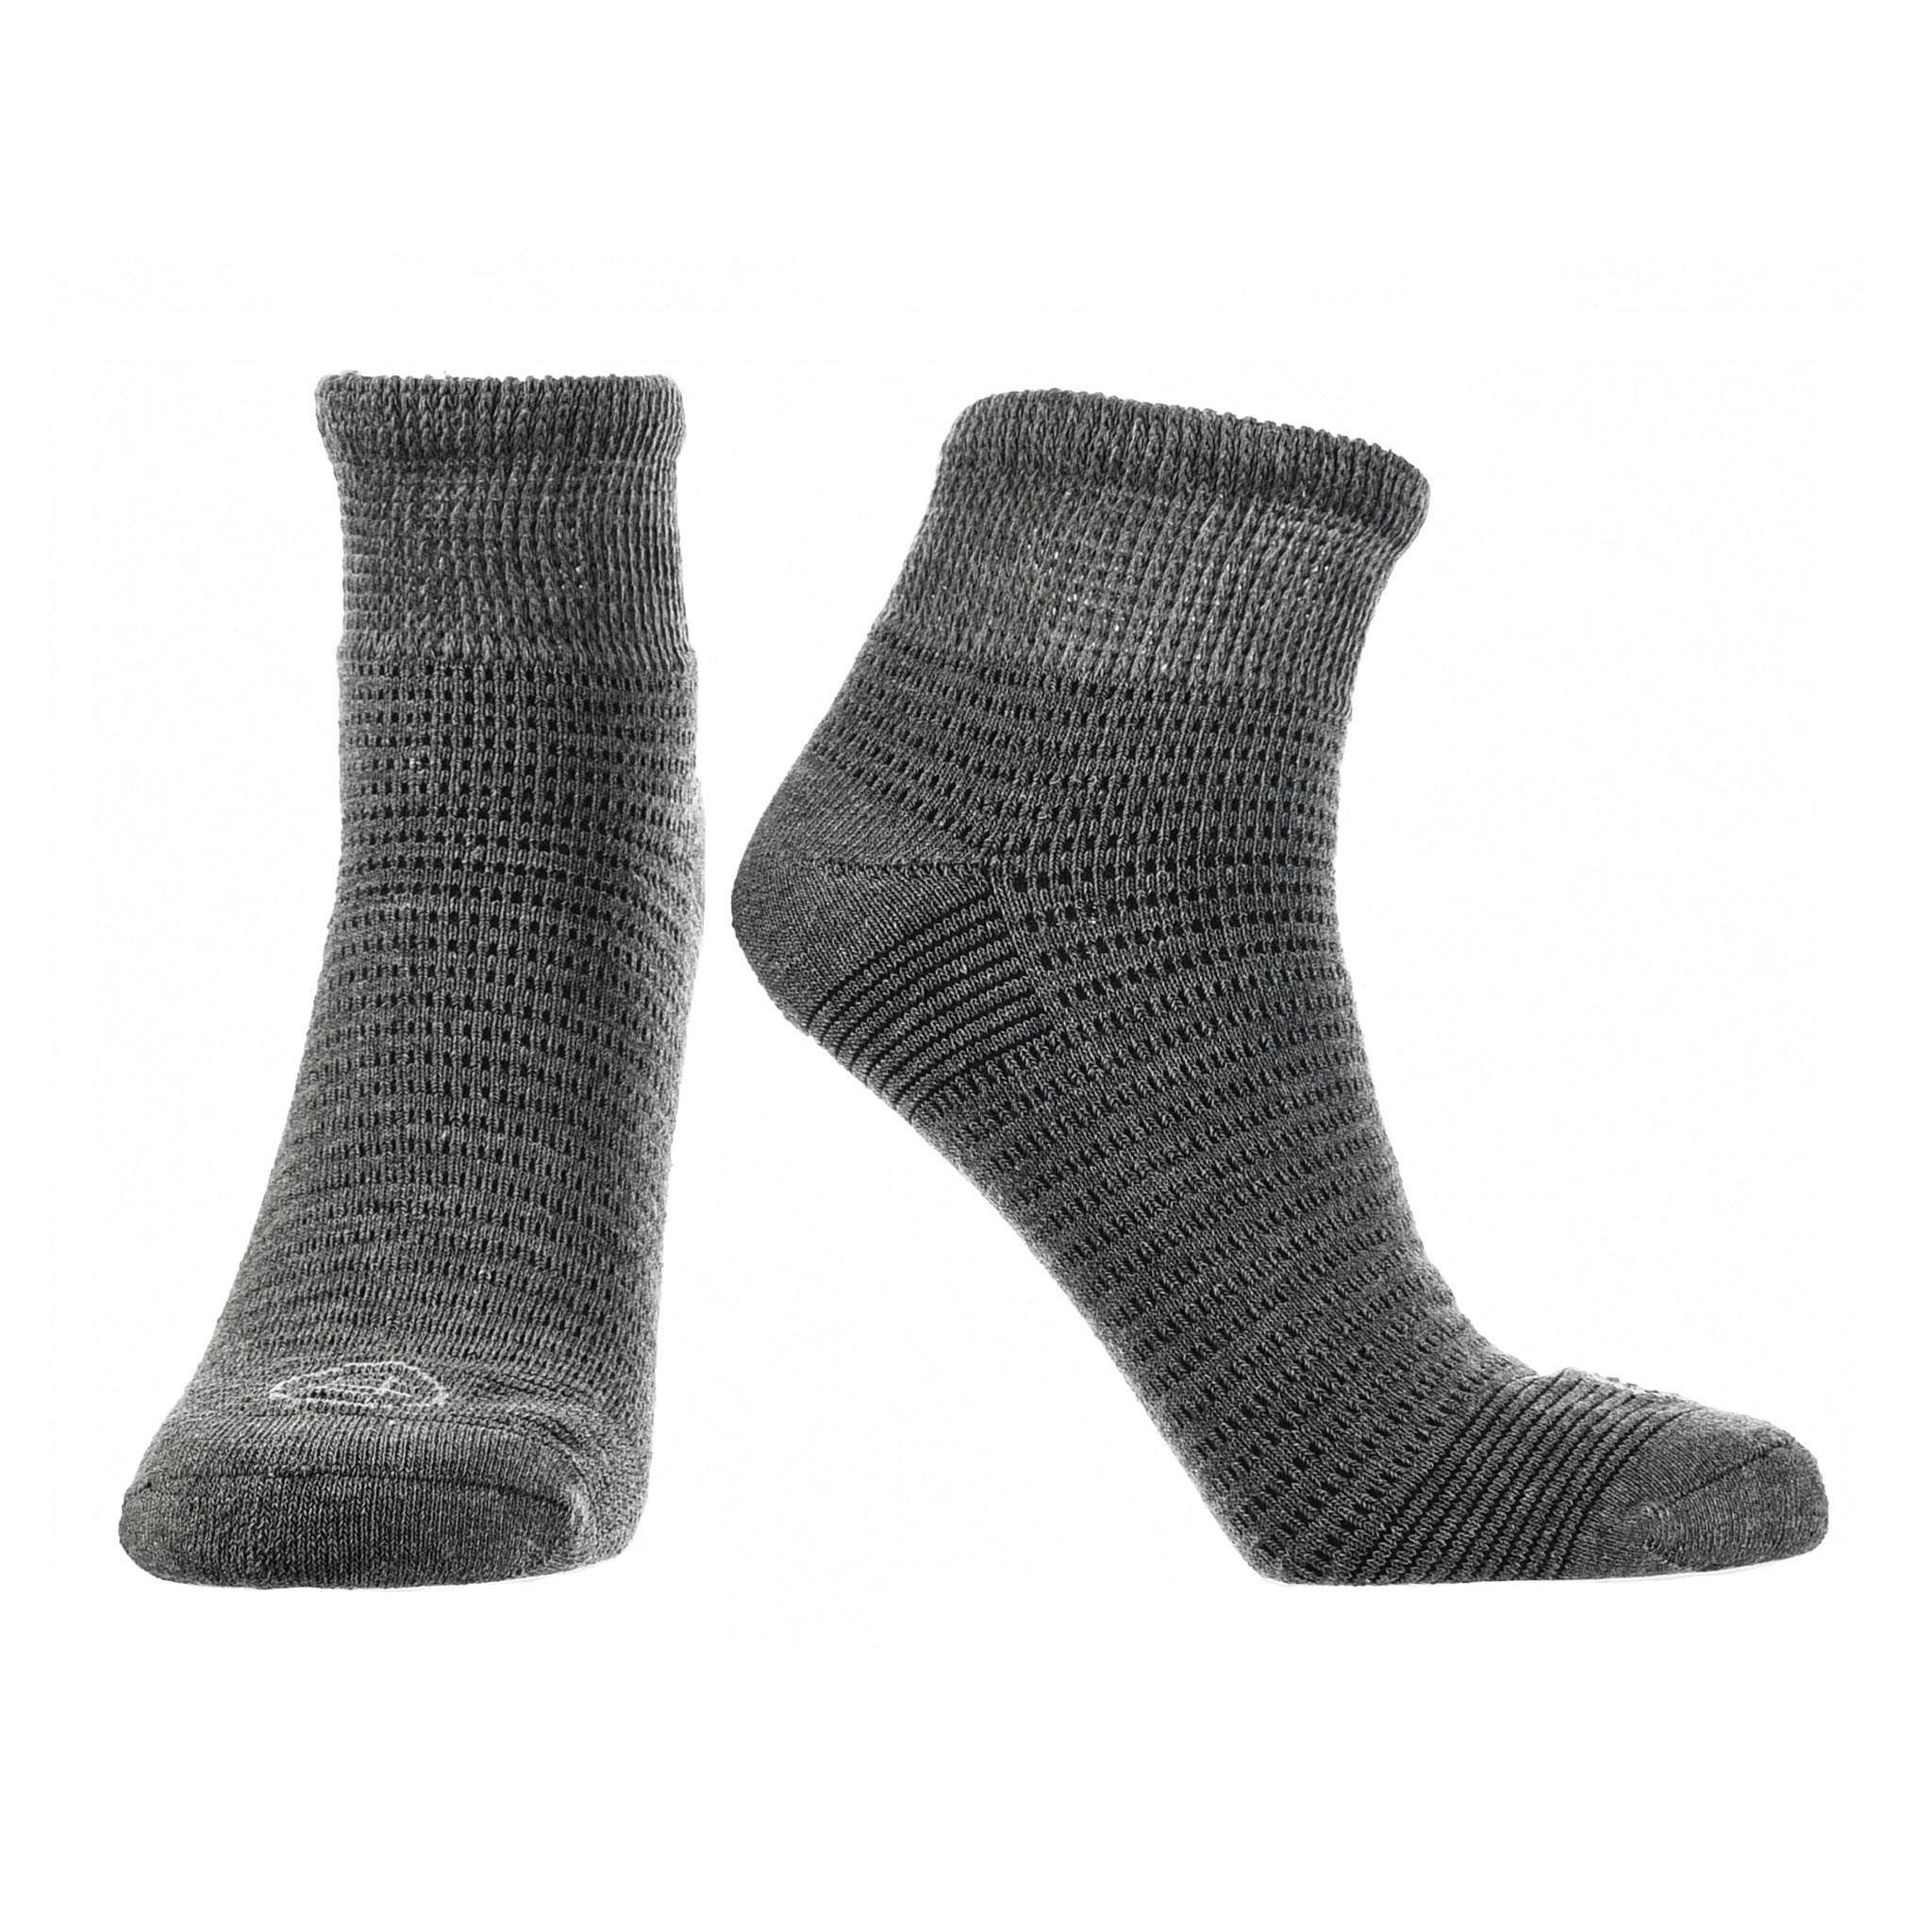 Physician's Choice Diabetic Comfy Quarter Length Socks - 12 Pair